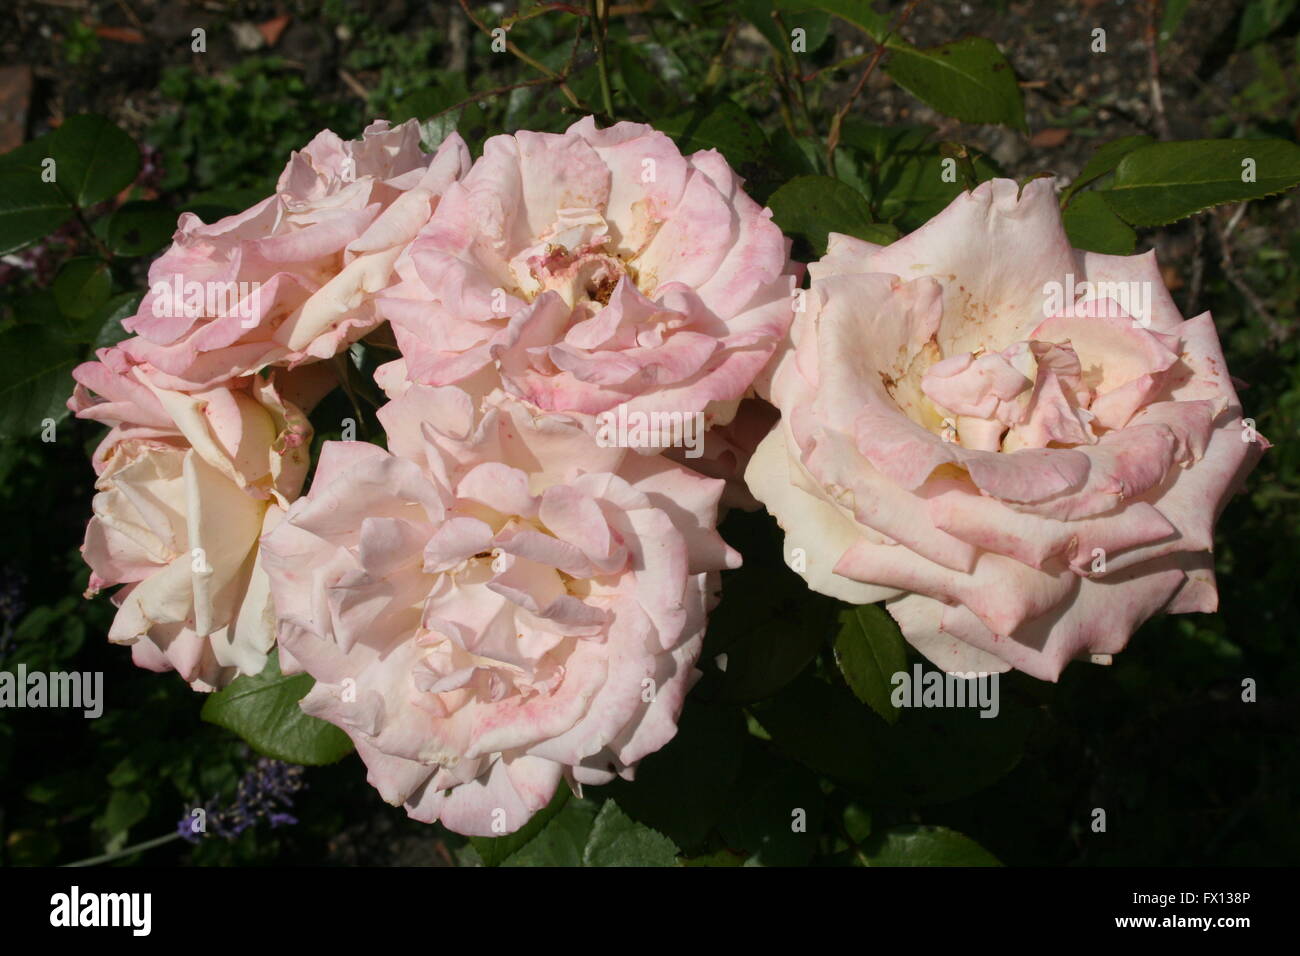 Rosa rosas de verano Foto de stock